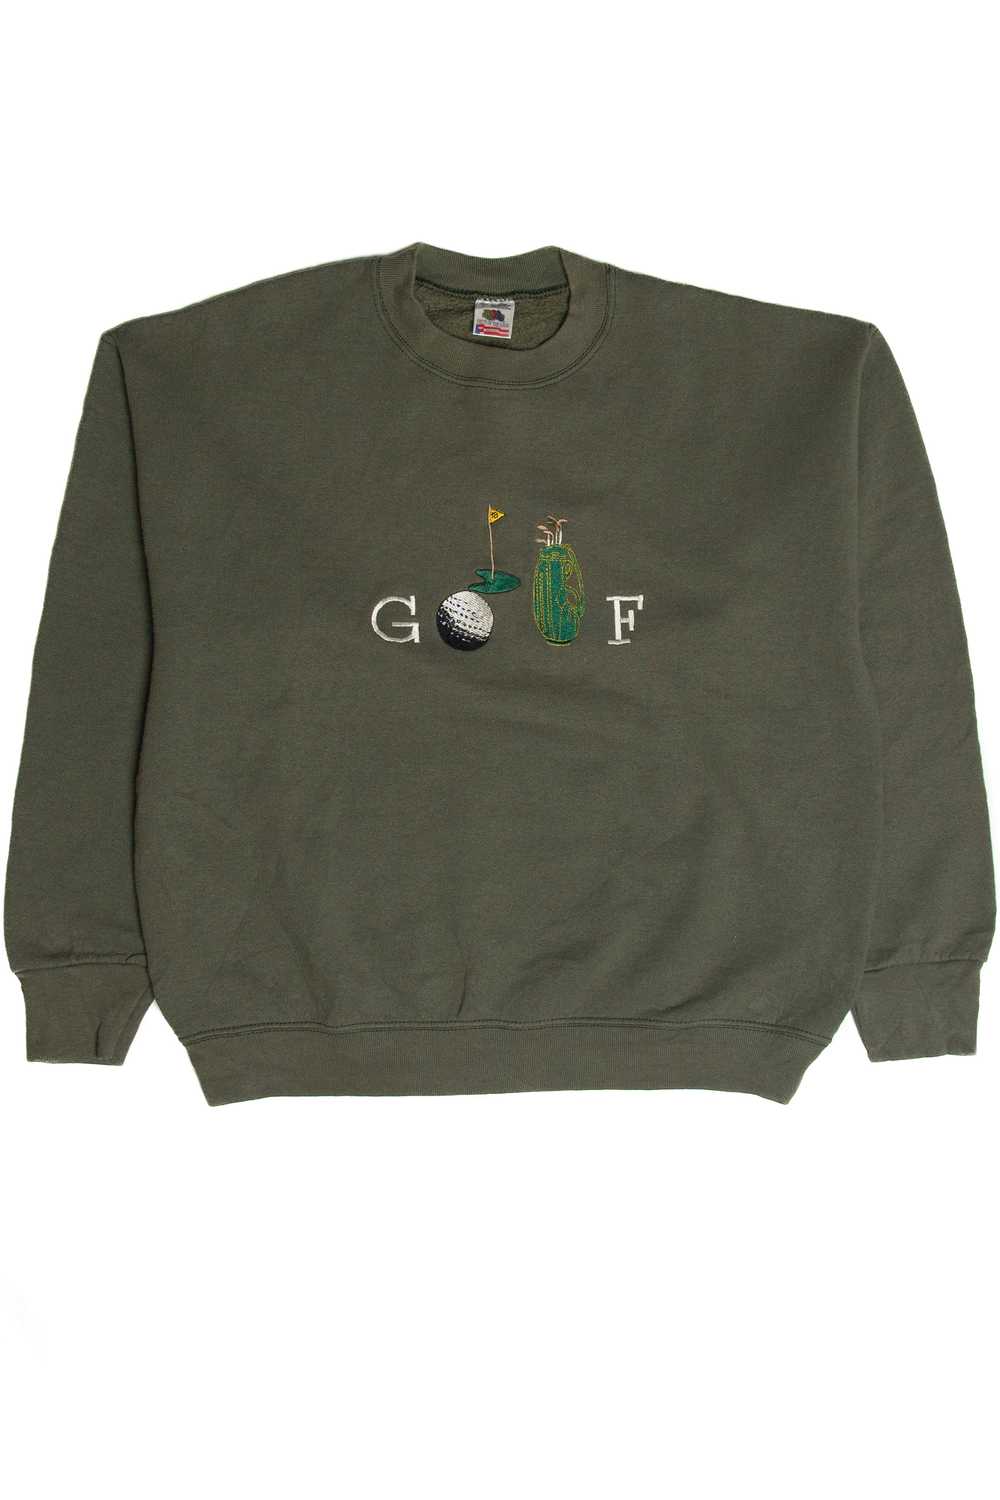 Vintage Golf Embroidered Sweatshirt - image 1